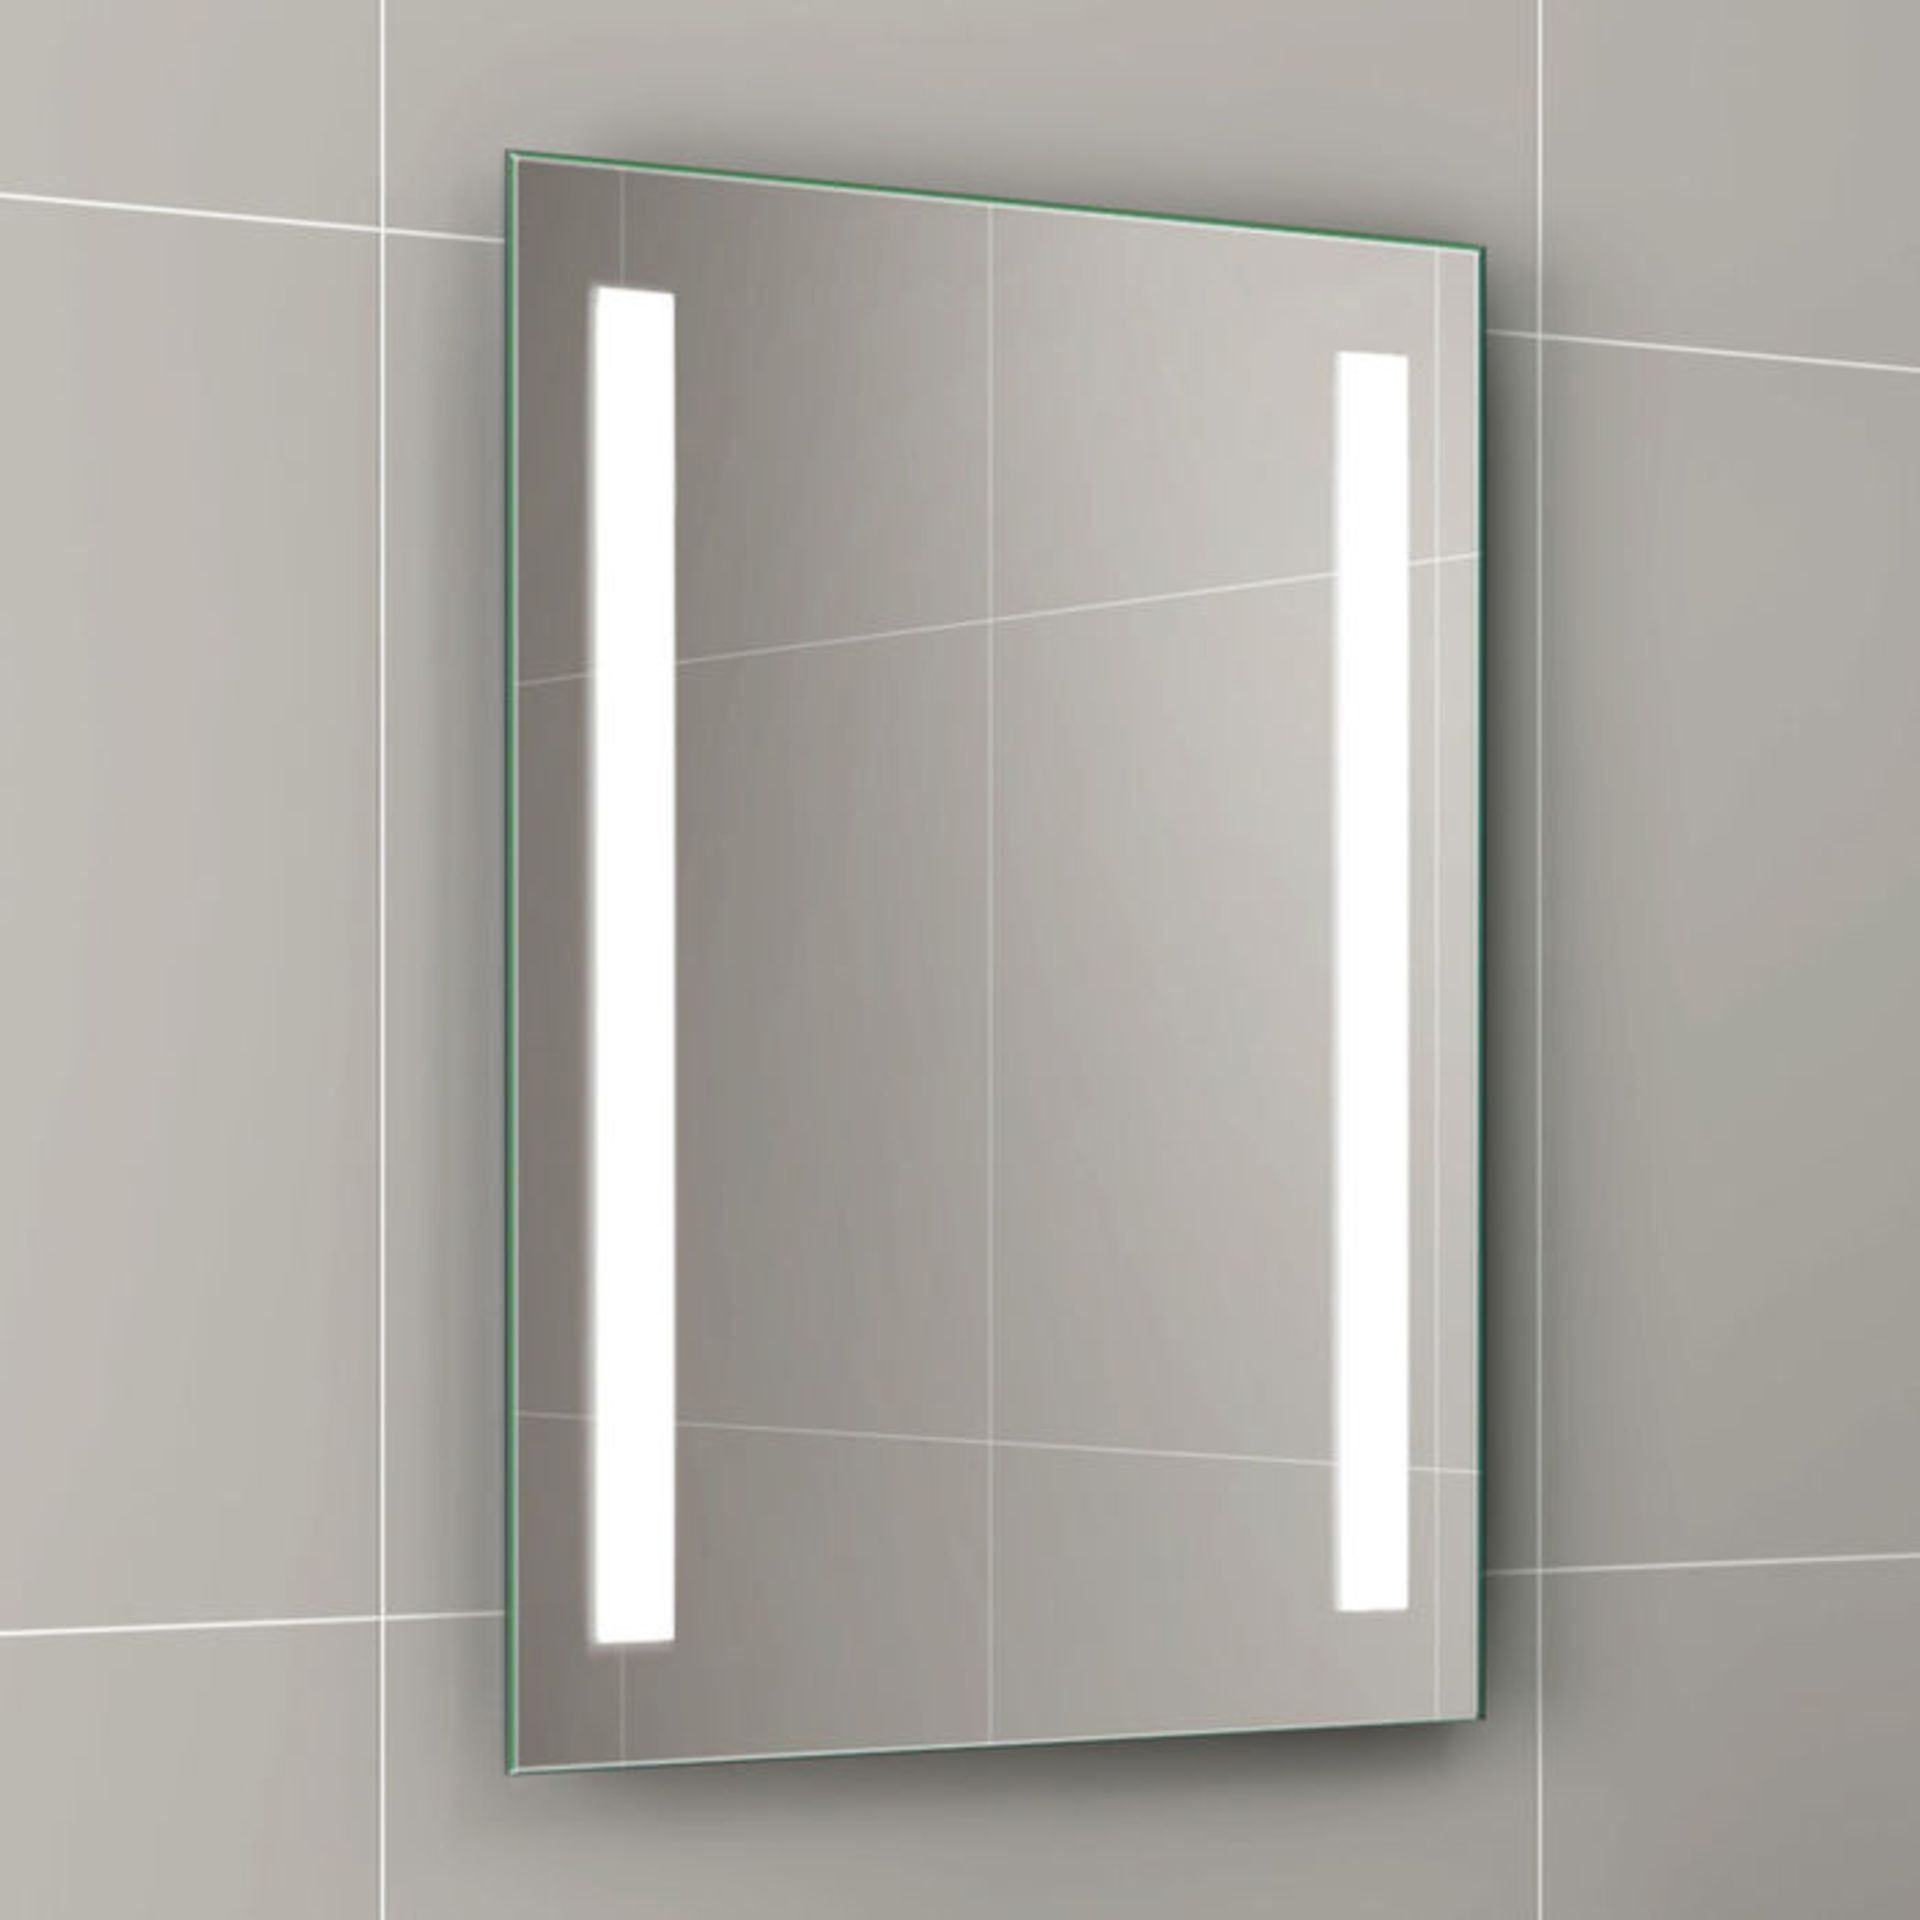 New 600 x 450mm Omega Illuminated Led Mirror. RRP £499.99.Ml2108.energy Saving Controlled On ... - Image 2 of 2